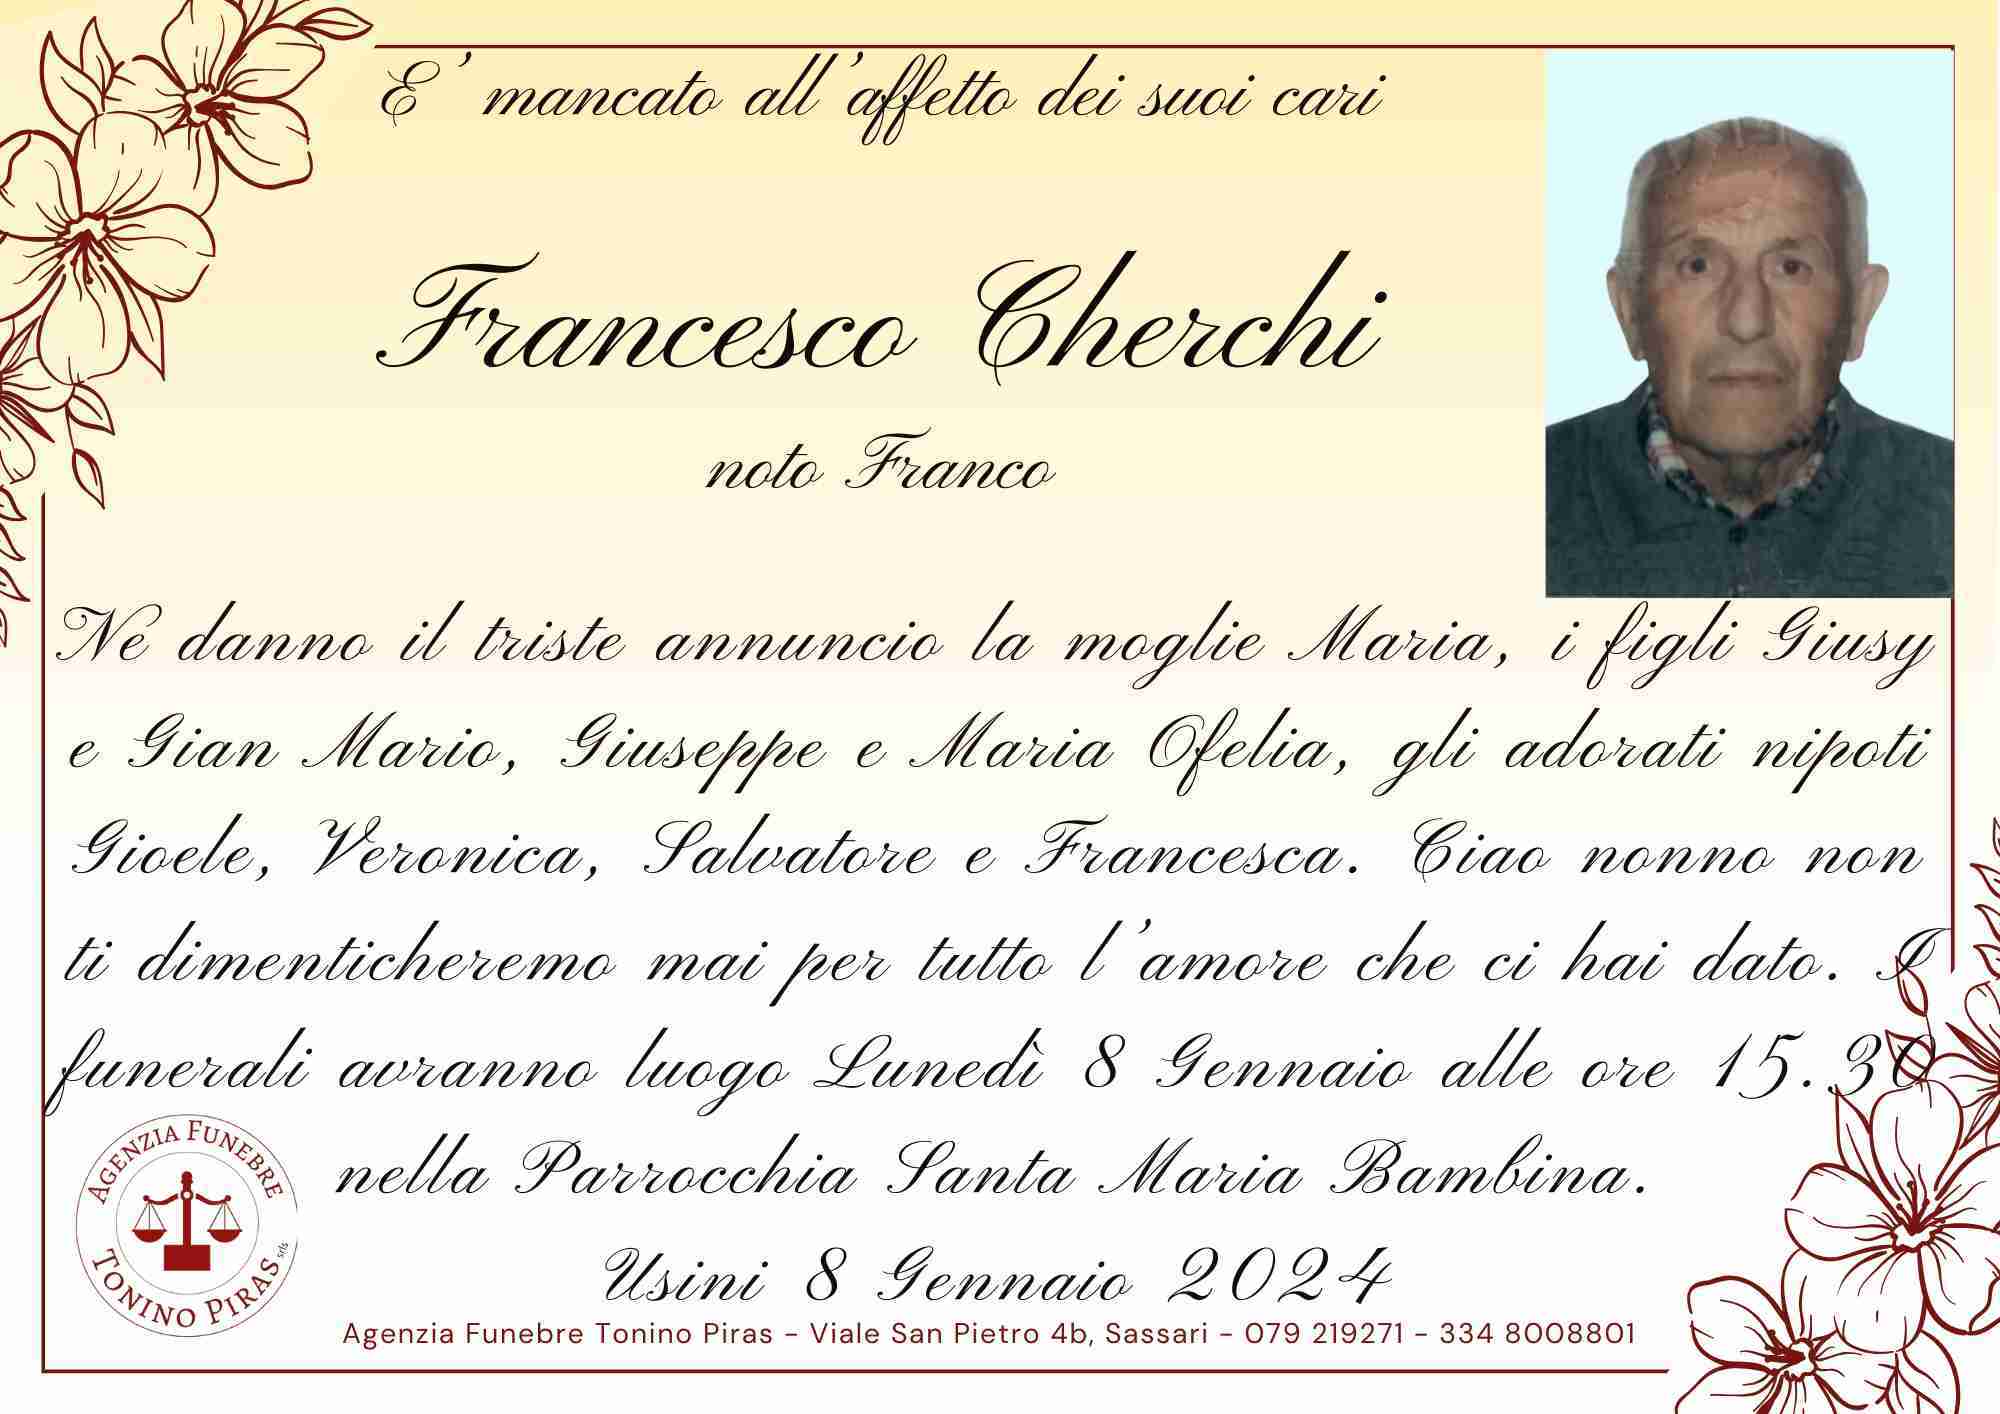 Francesco Cherchi